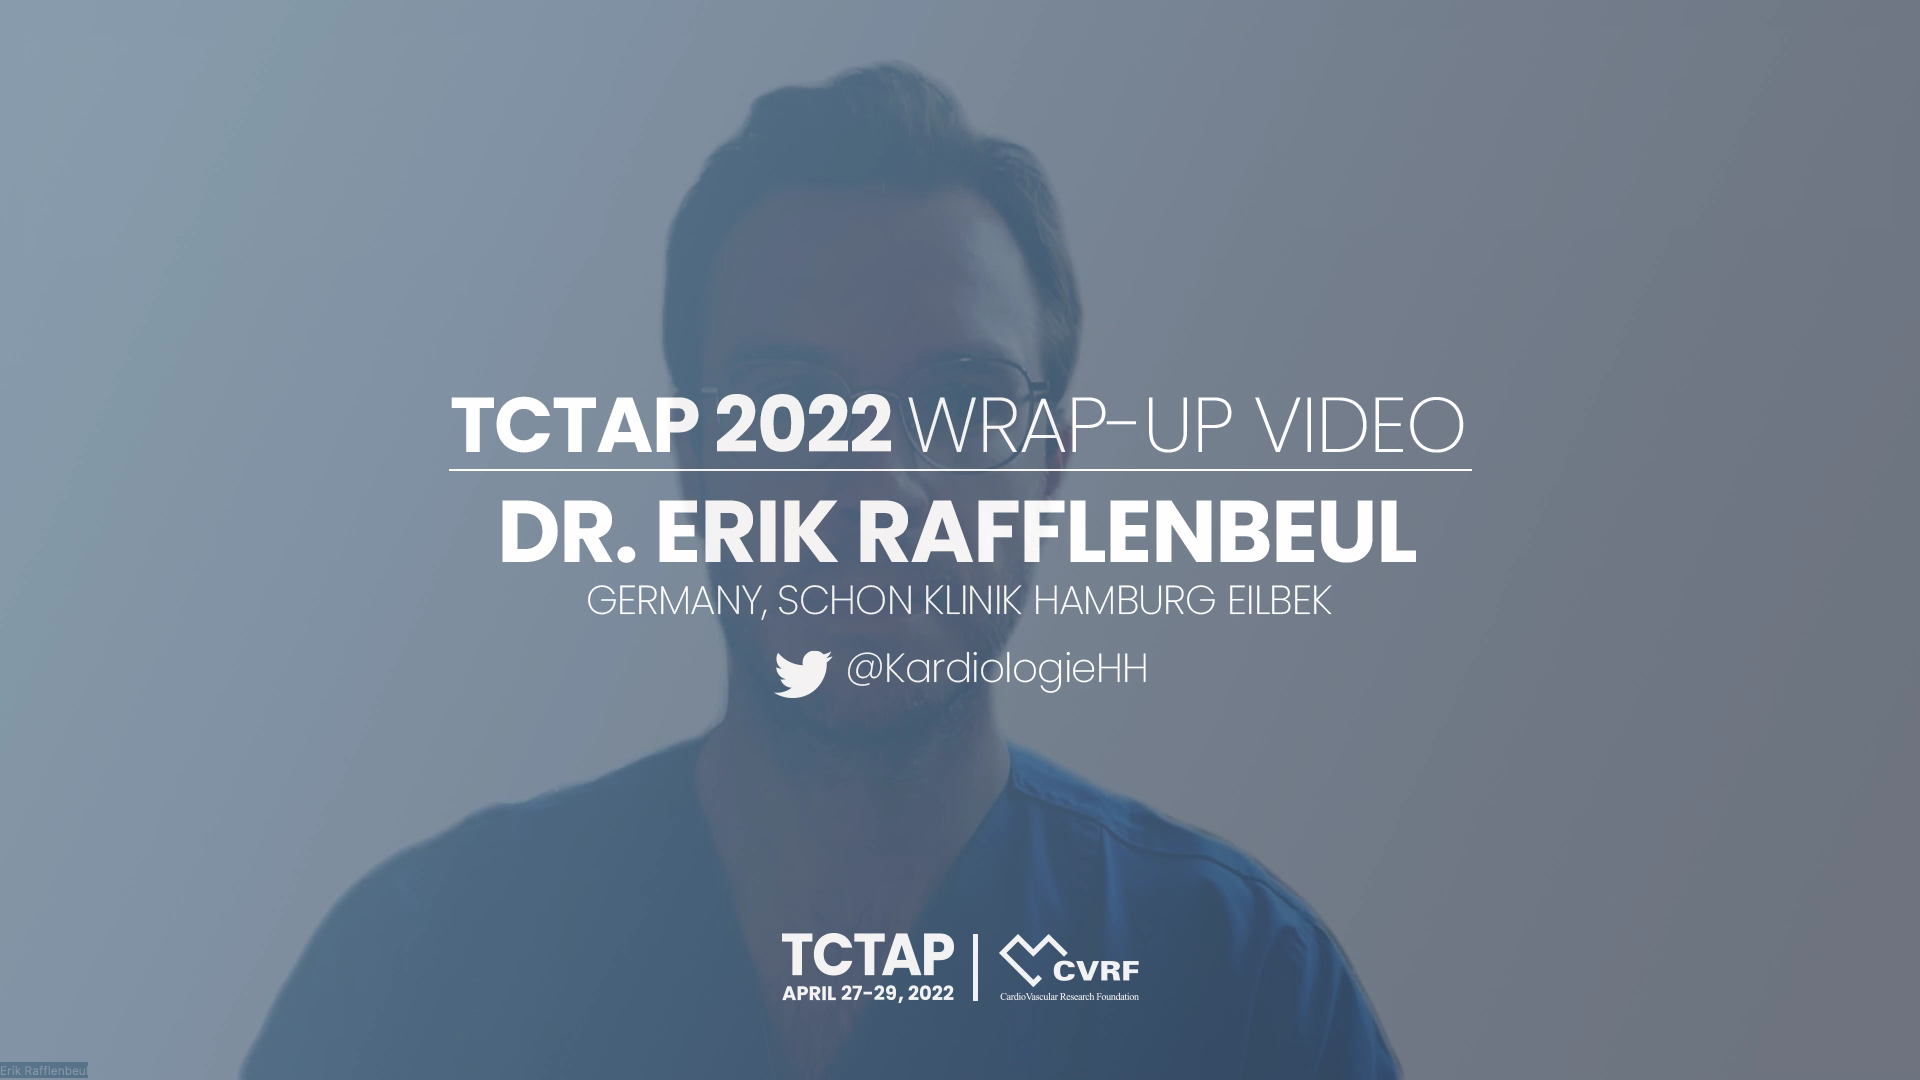 TCTAP 2022 Wrap-up Video from Dr. Erik Rafflenbeul